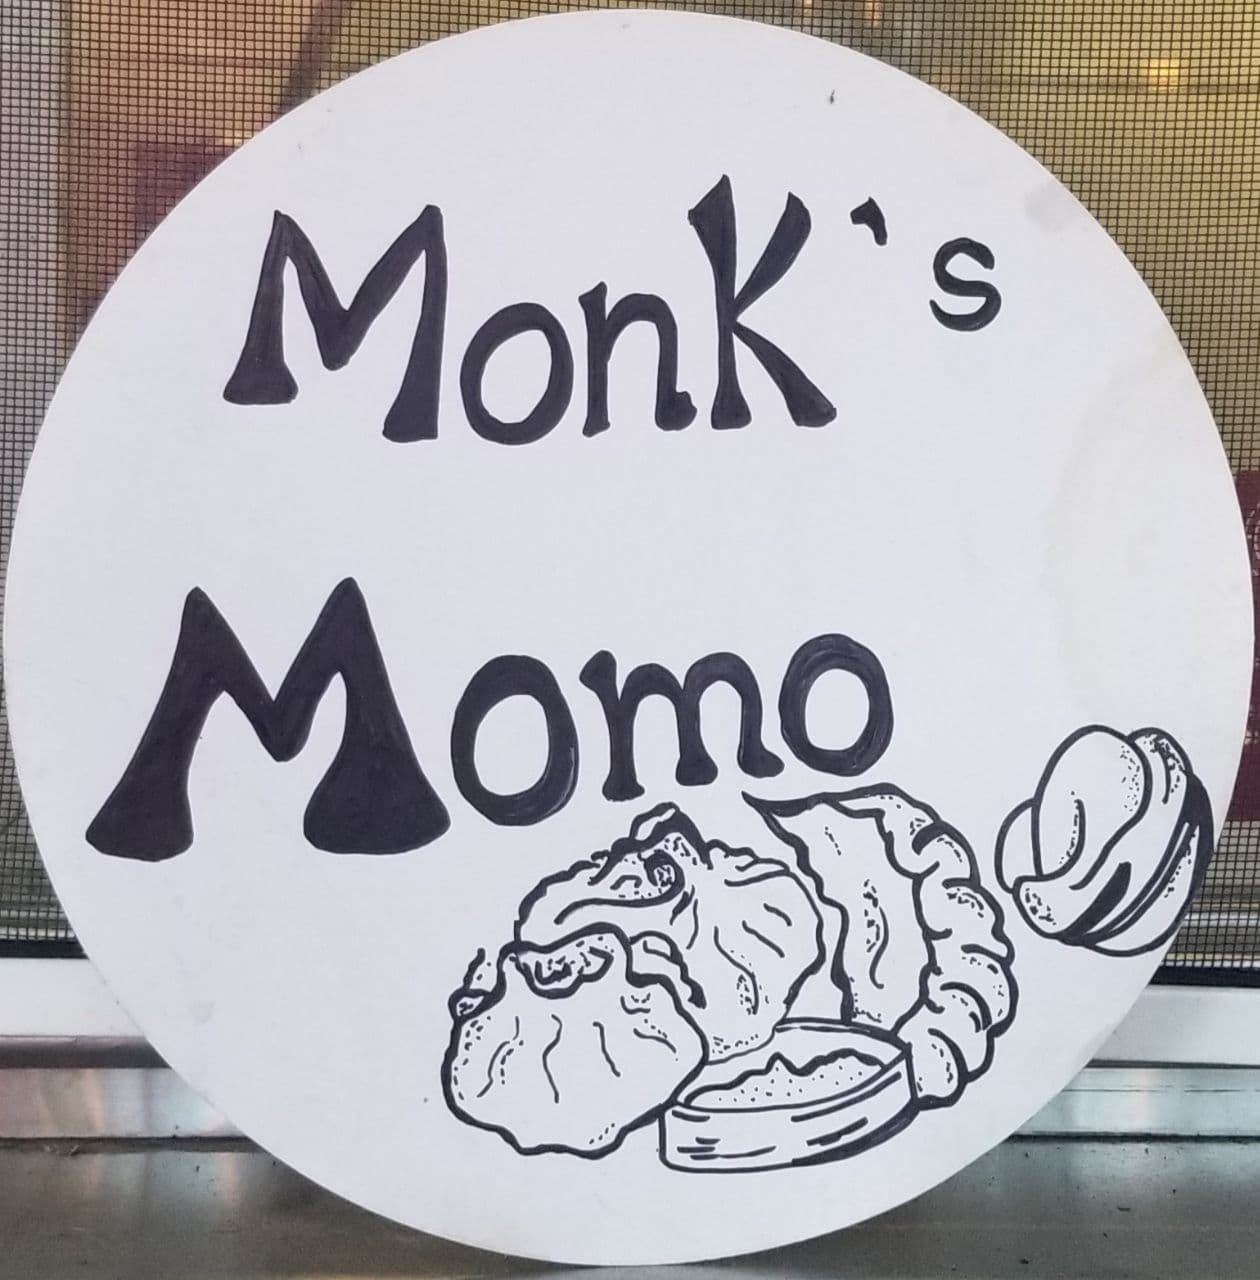 Monk's Momo